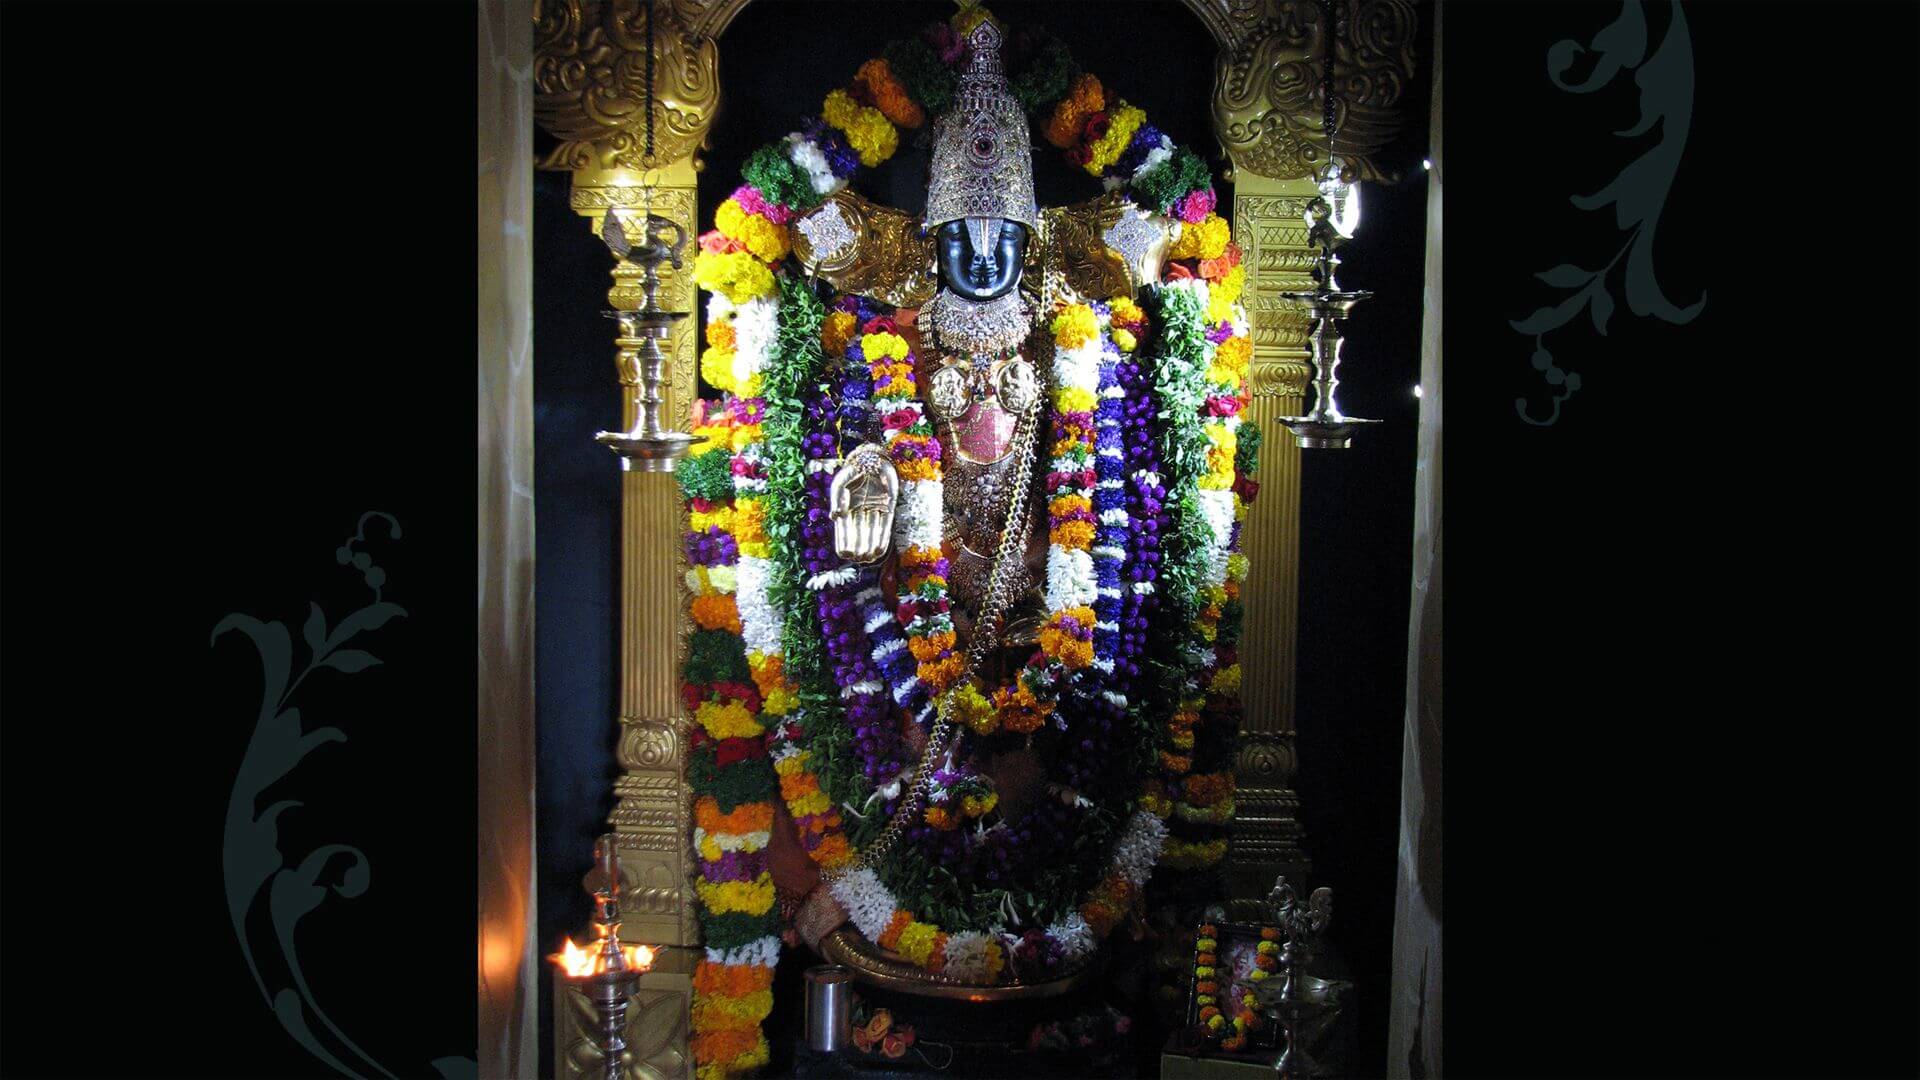 God Venkateswara Image, Picture, Photo And Desktop Wallpaper